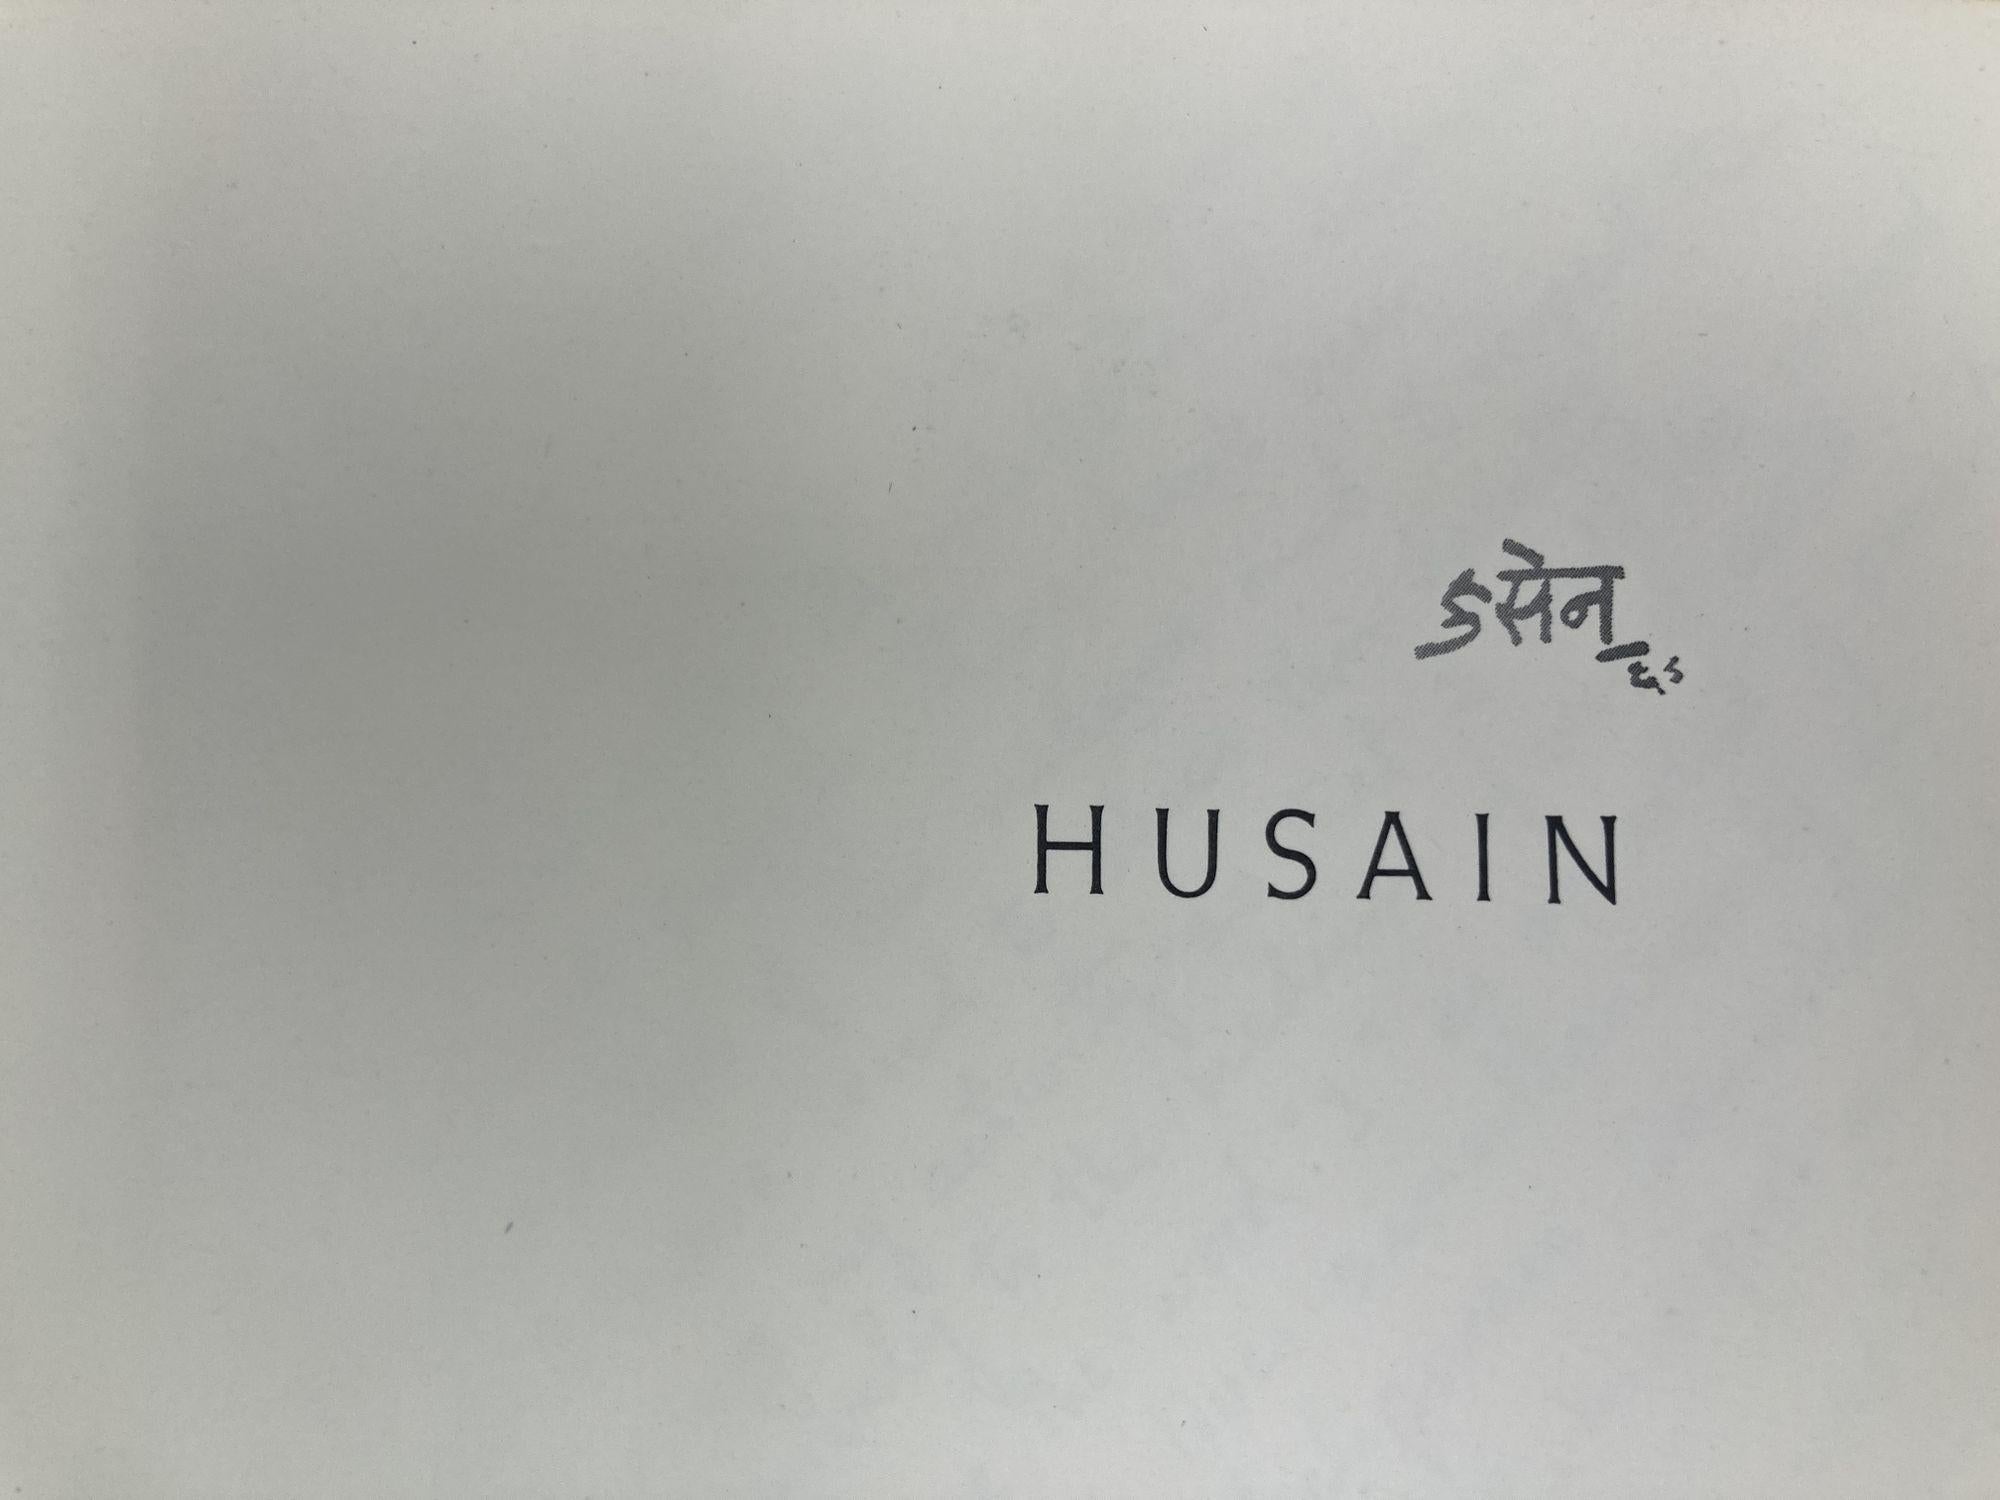 20th Century Husain by Maqbul Fida Husain, Richard Bartholomew, Shiv S. Kapur, H. N. Abrams For Sale